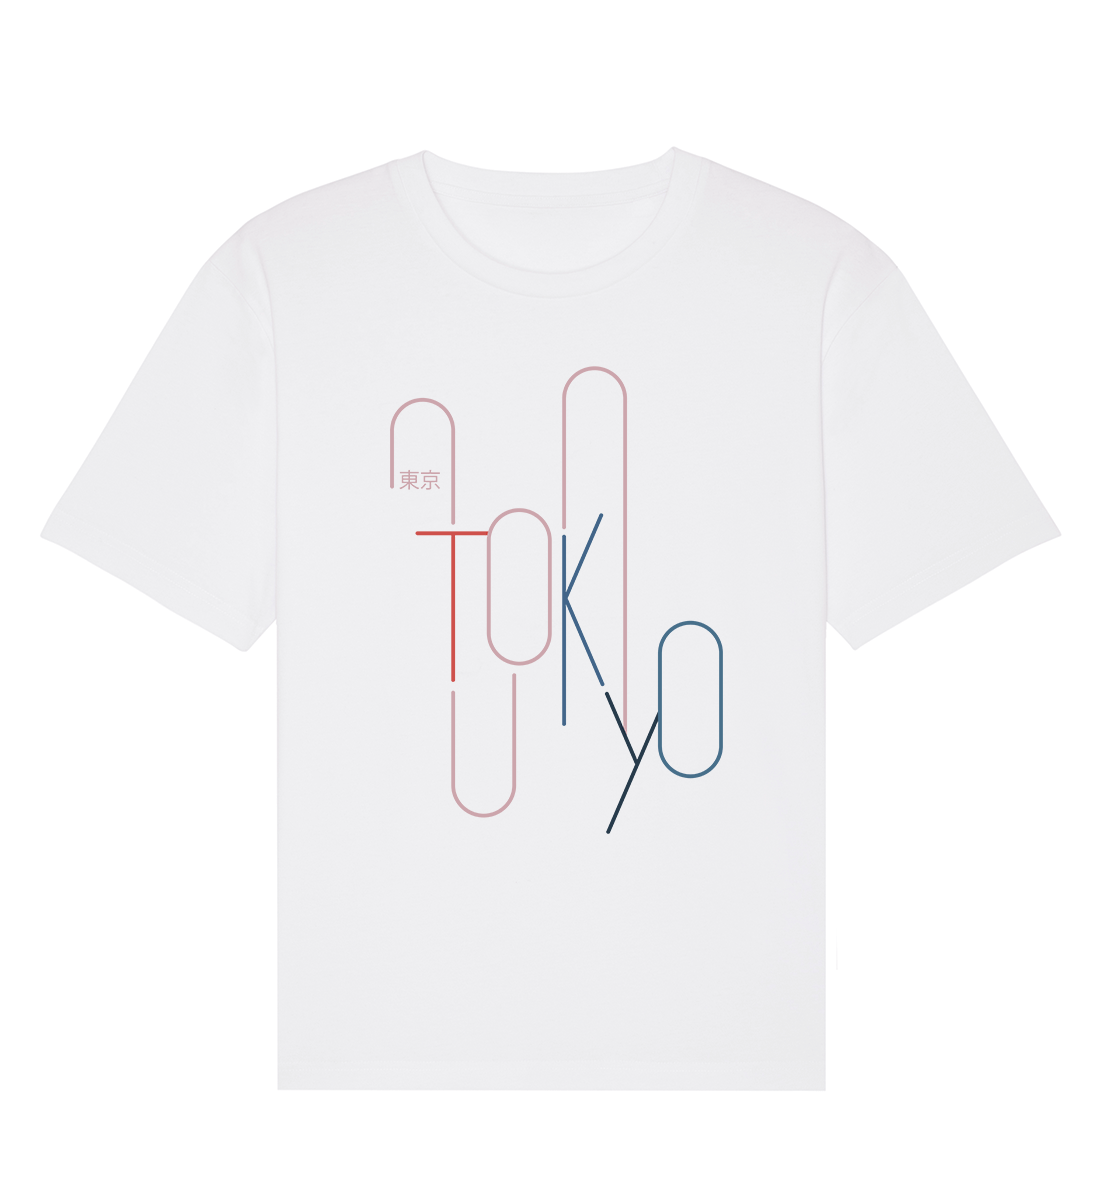 Tokyo No. 1 東京 - Herren Relaxed T-Shirt